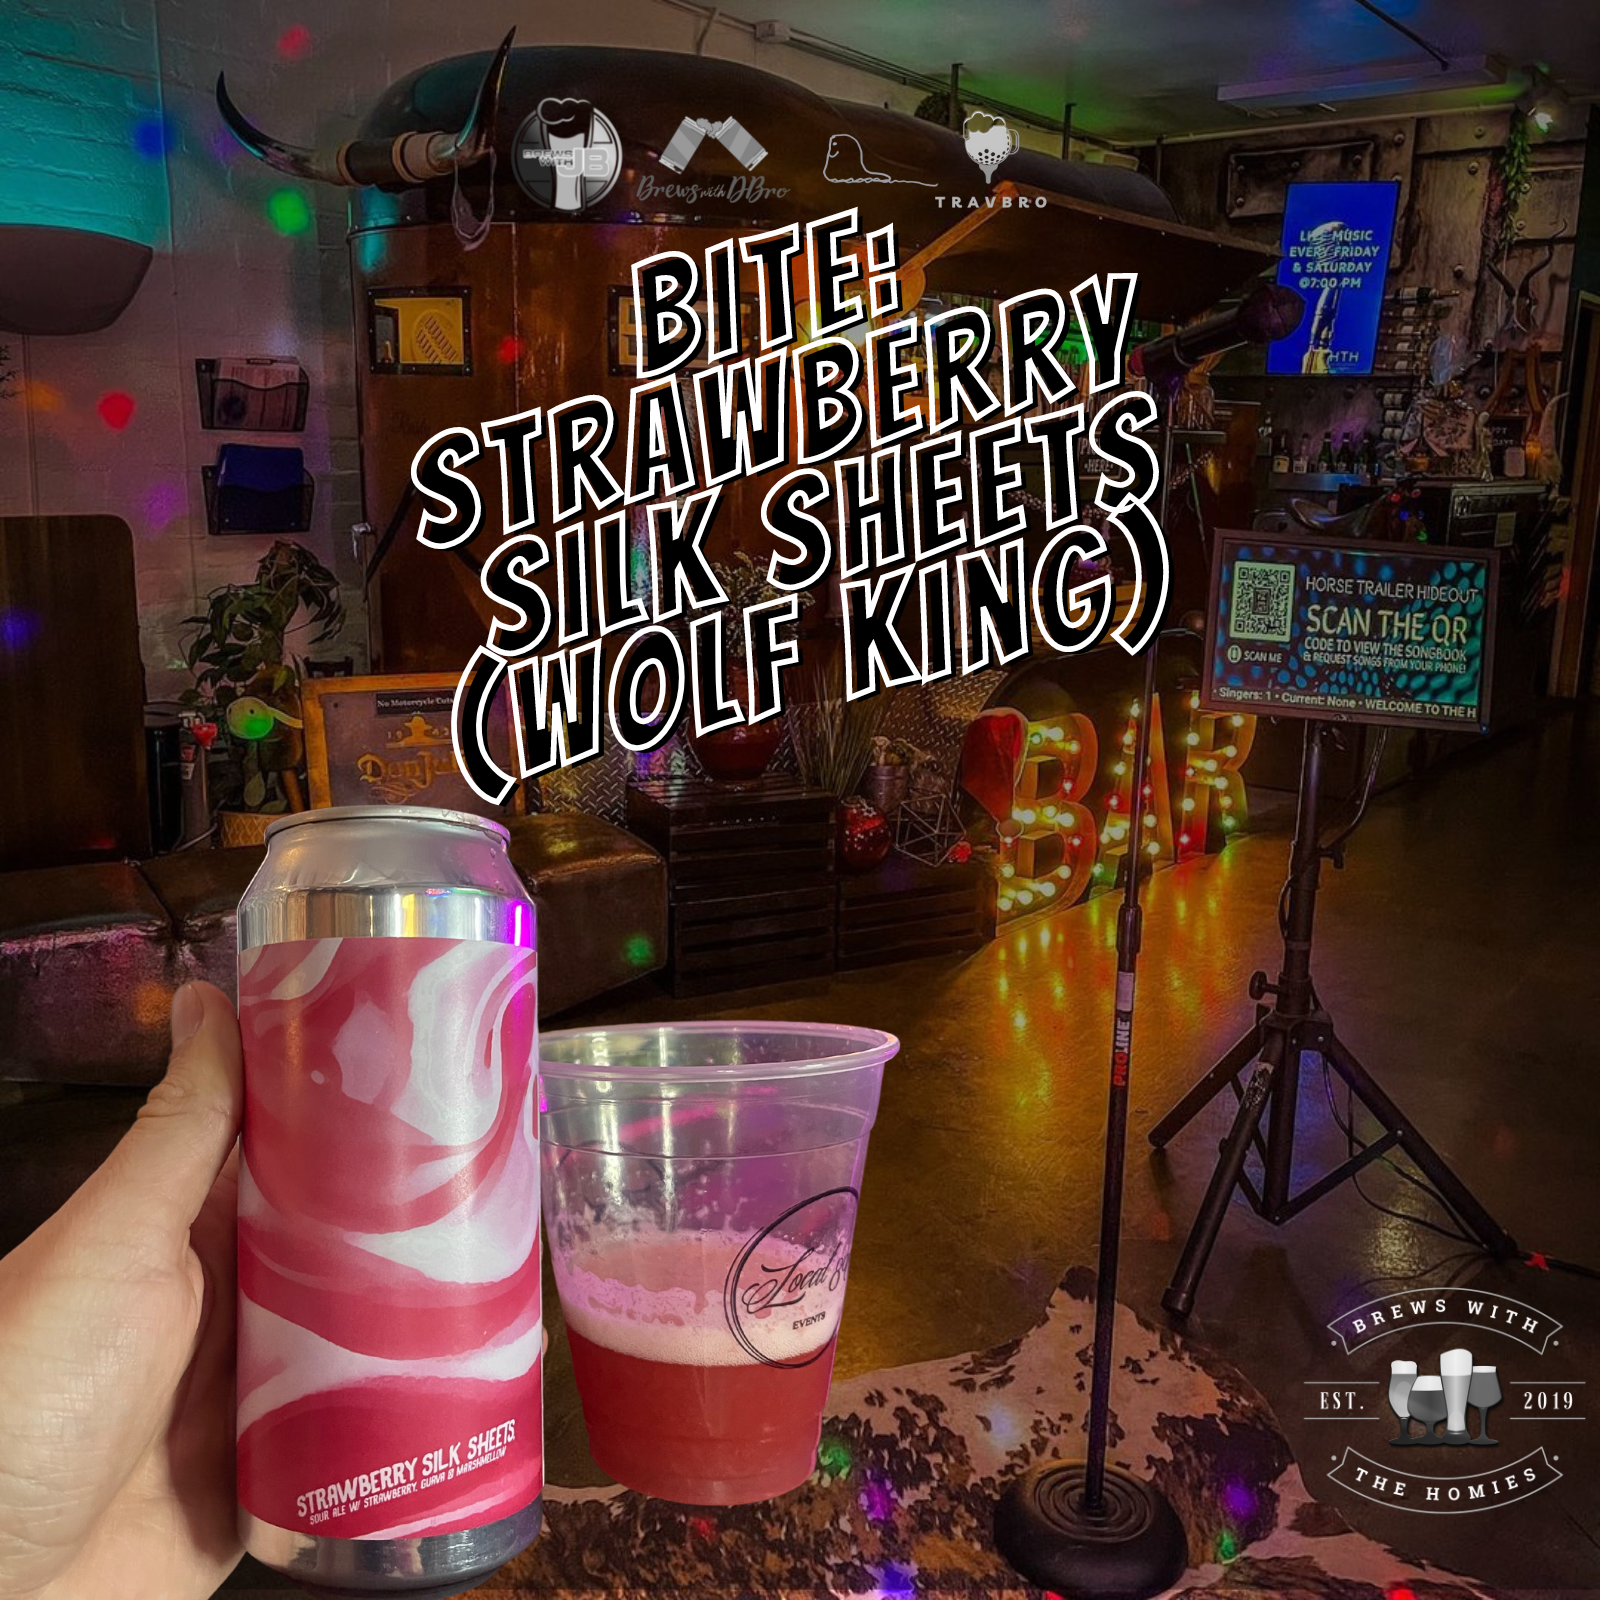 Bite: Strawberry Silk Streets (Wolf King Brewing)